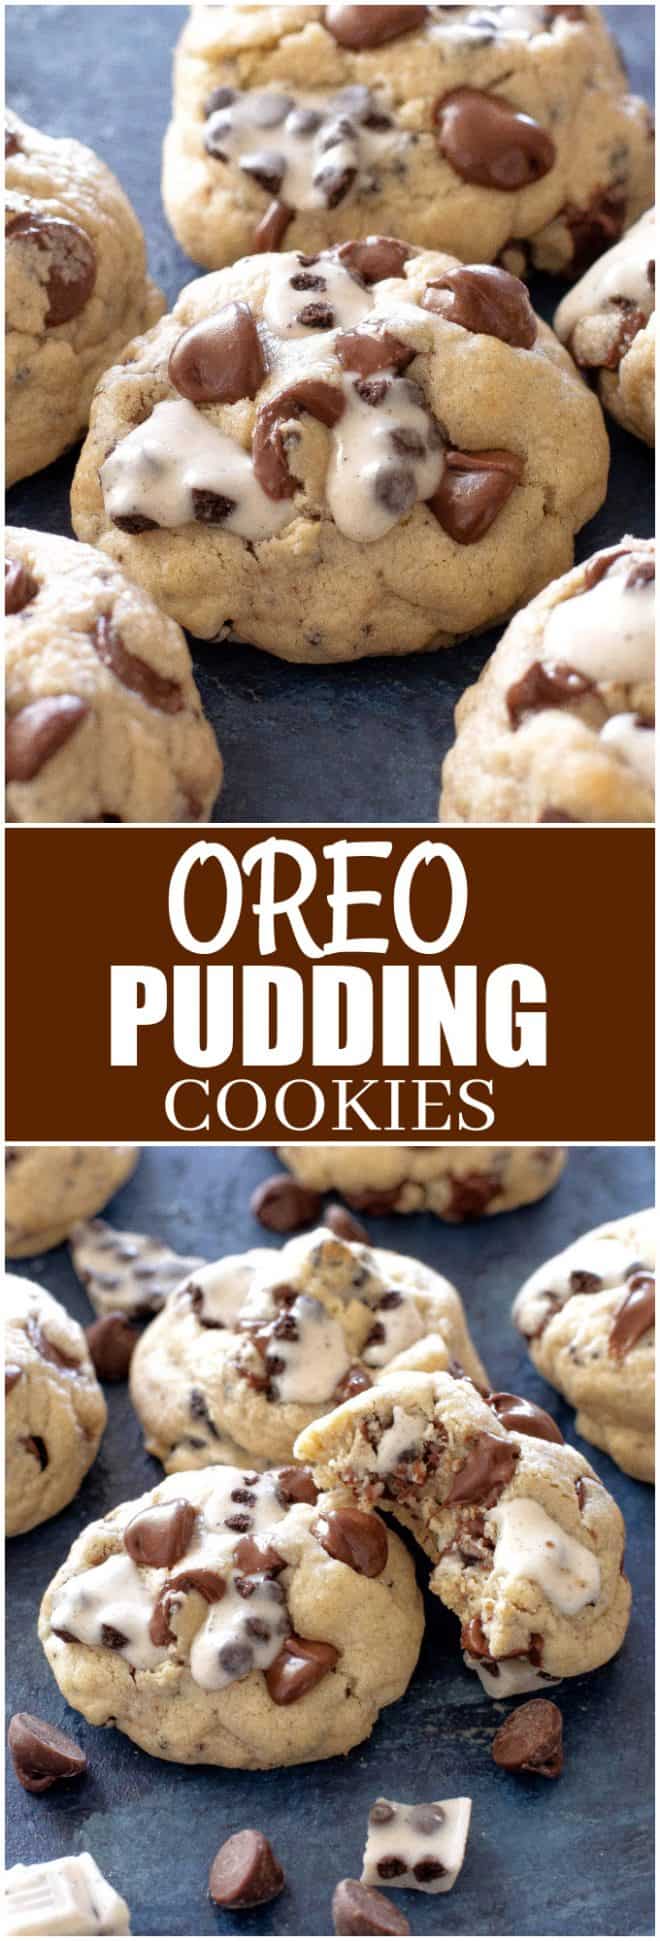 oreo pudding cookies